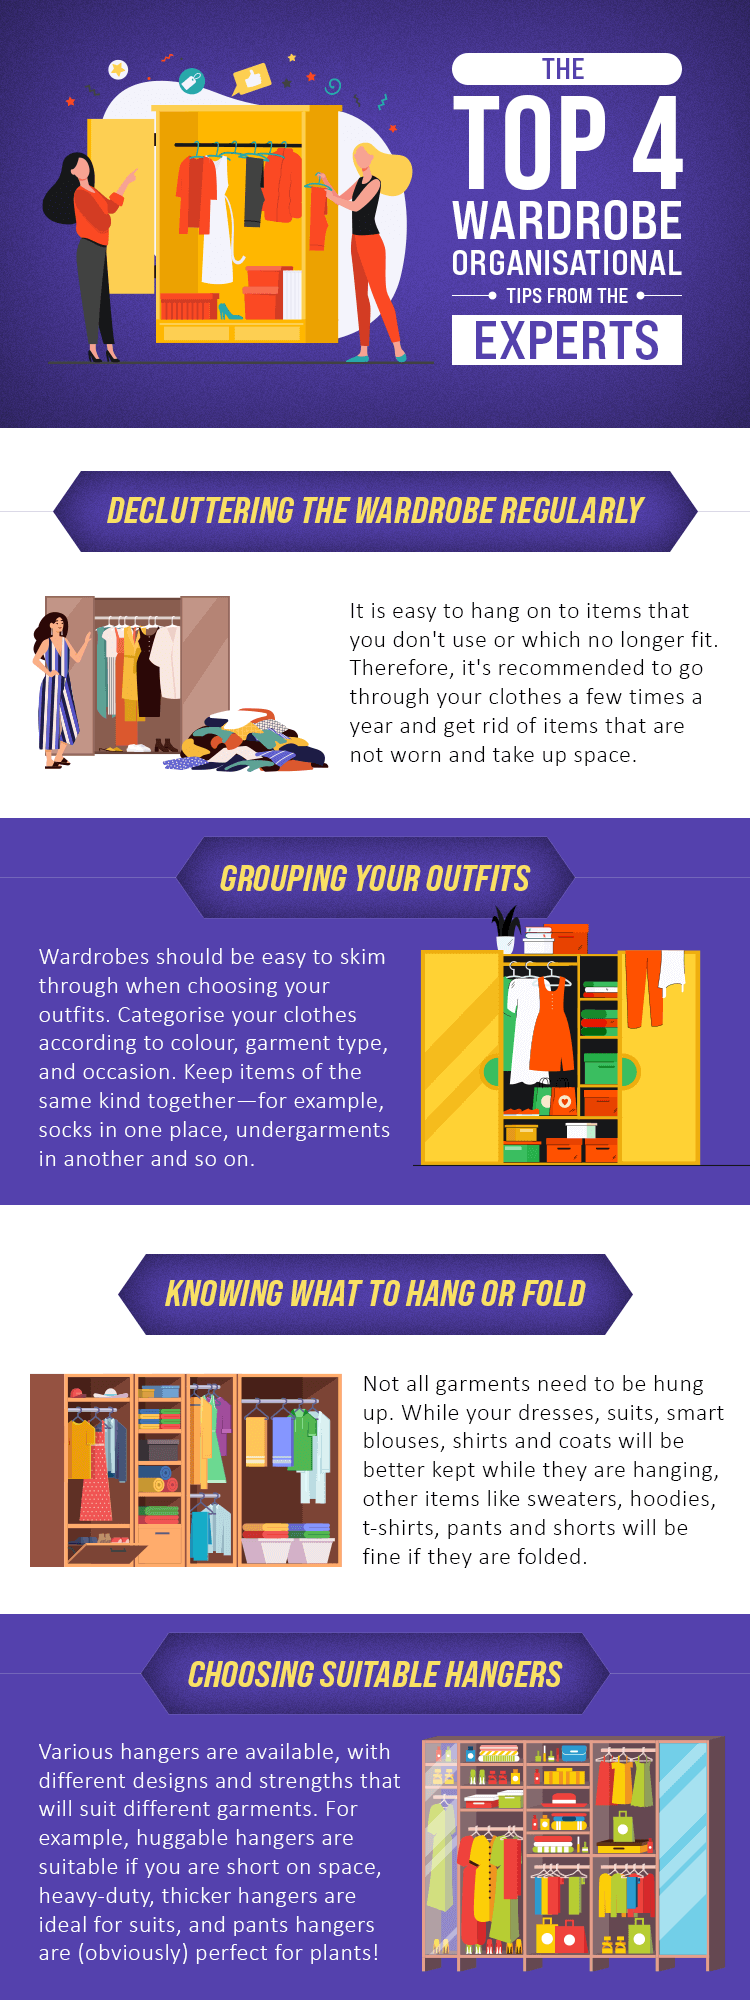 Wardrobe-Organisational-Tips